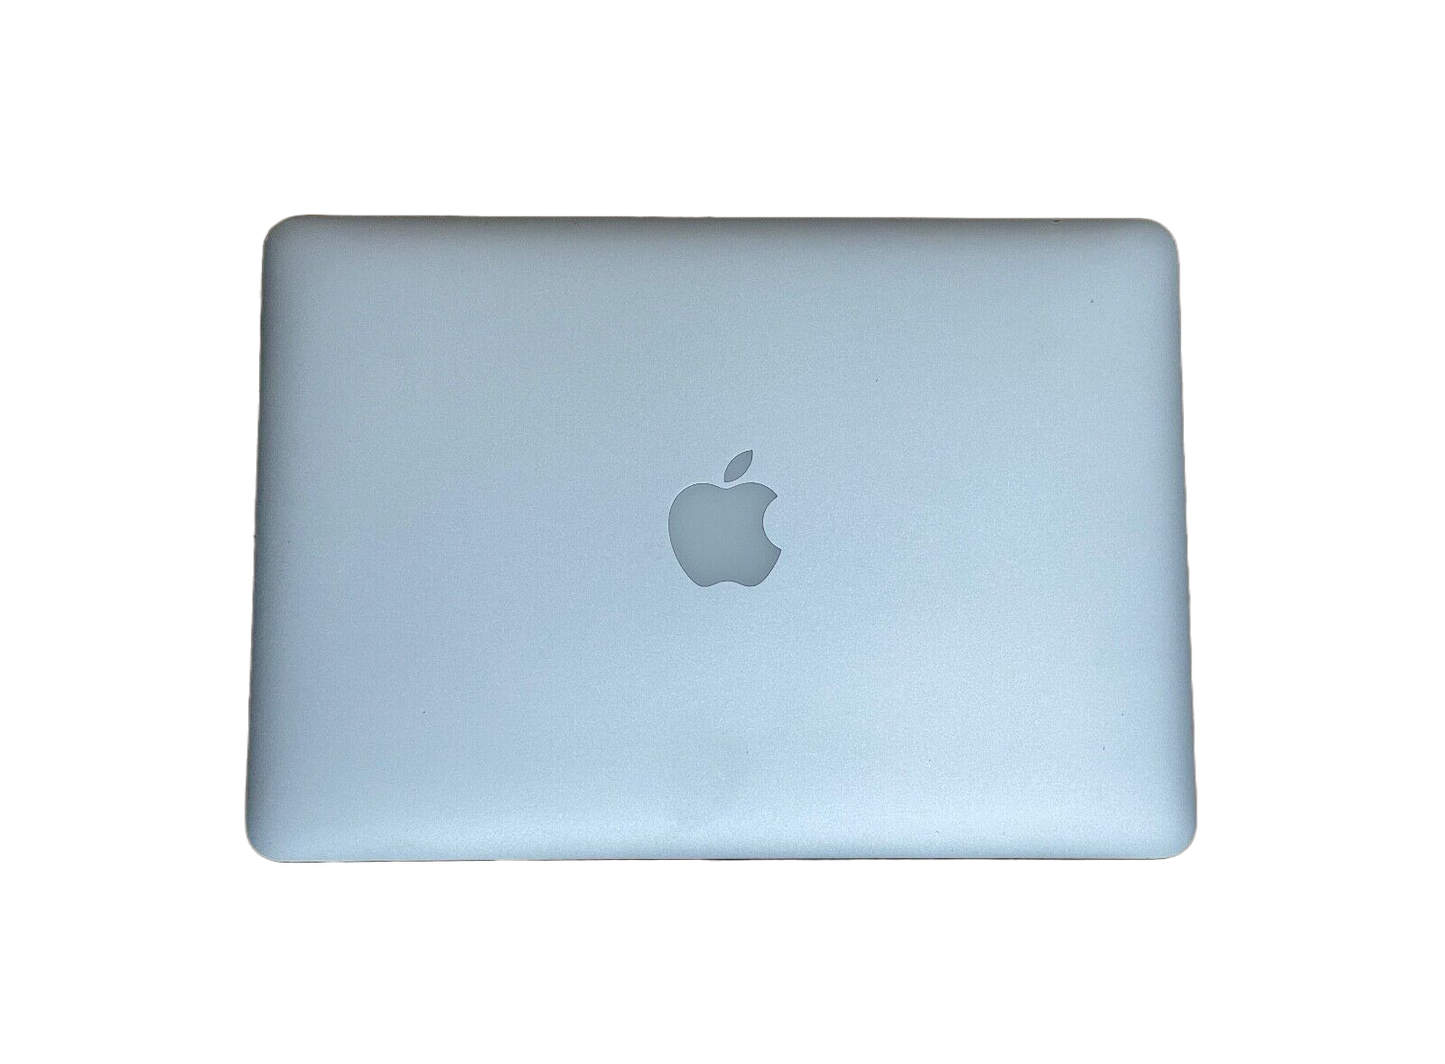 Apple MacBook Pro Laptop 13-inch Early 2015 - 2.7GHz i5, 8GB RAM, 128GB SSD